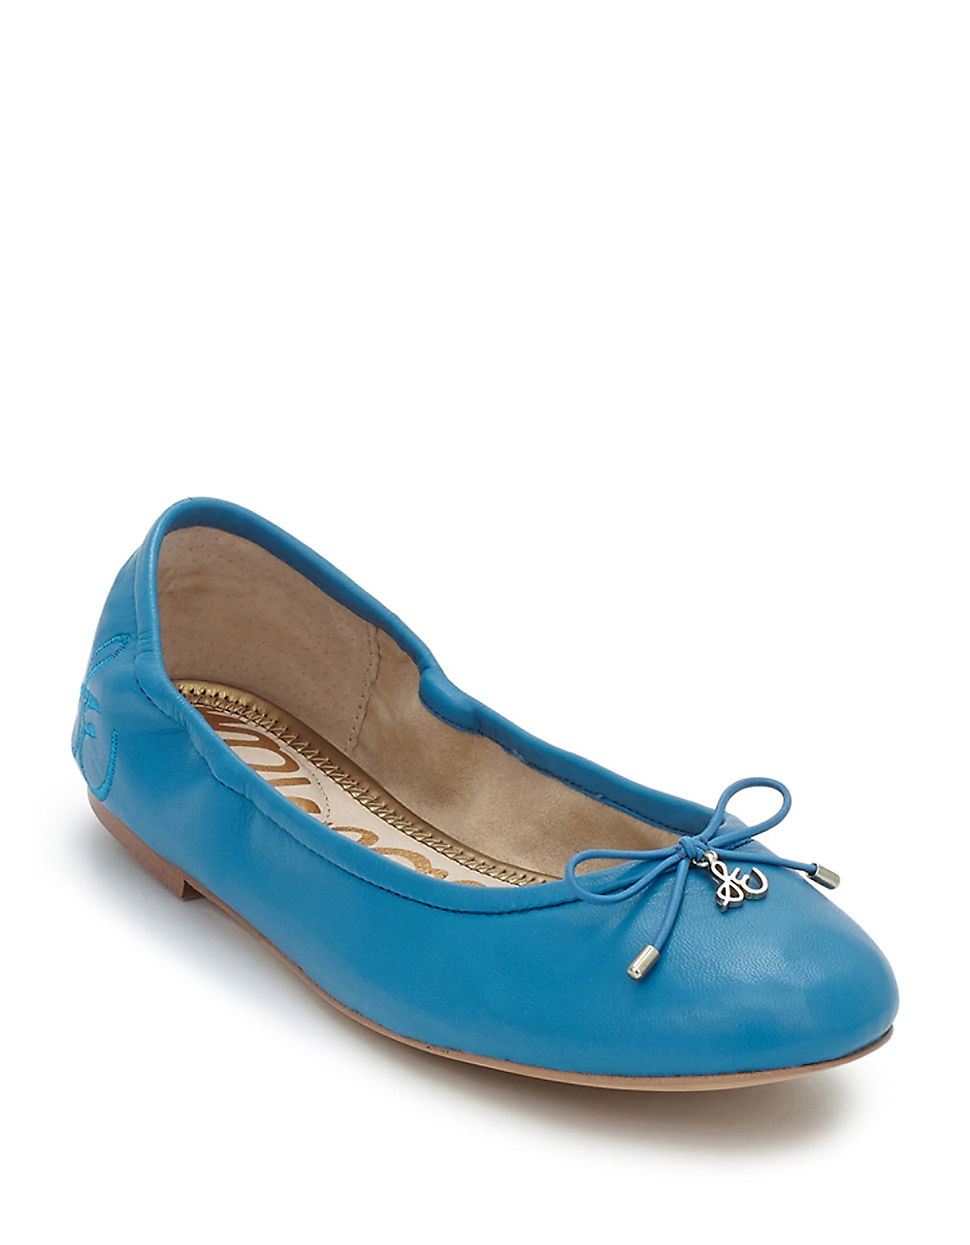 Lyst - Sam Edelman Felicia Leather Ballet Flats in Blue